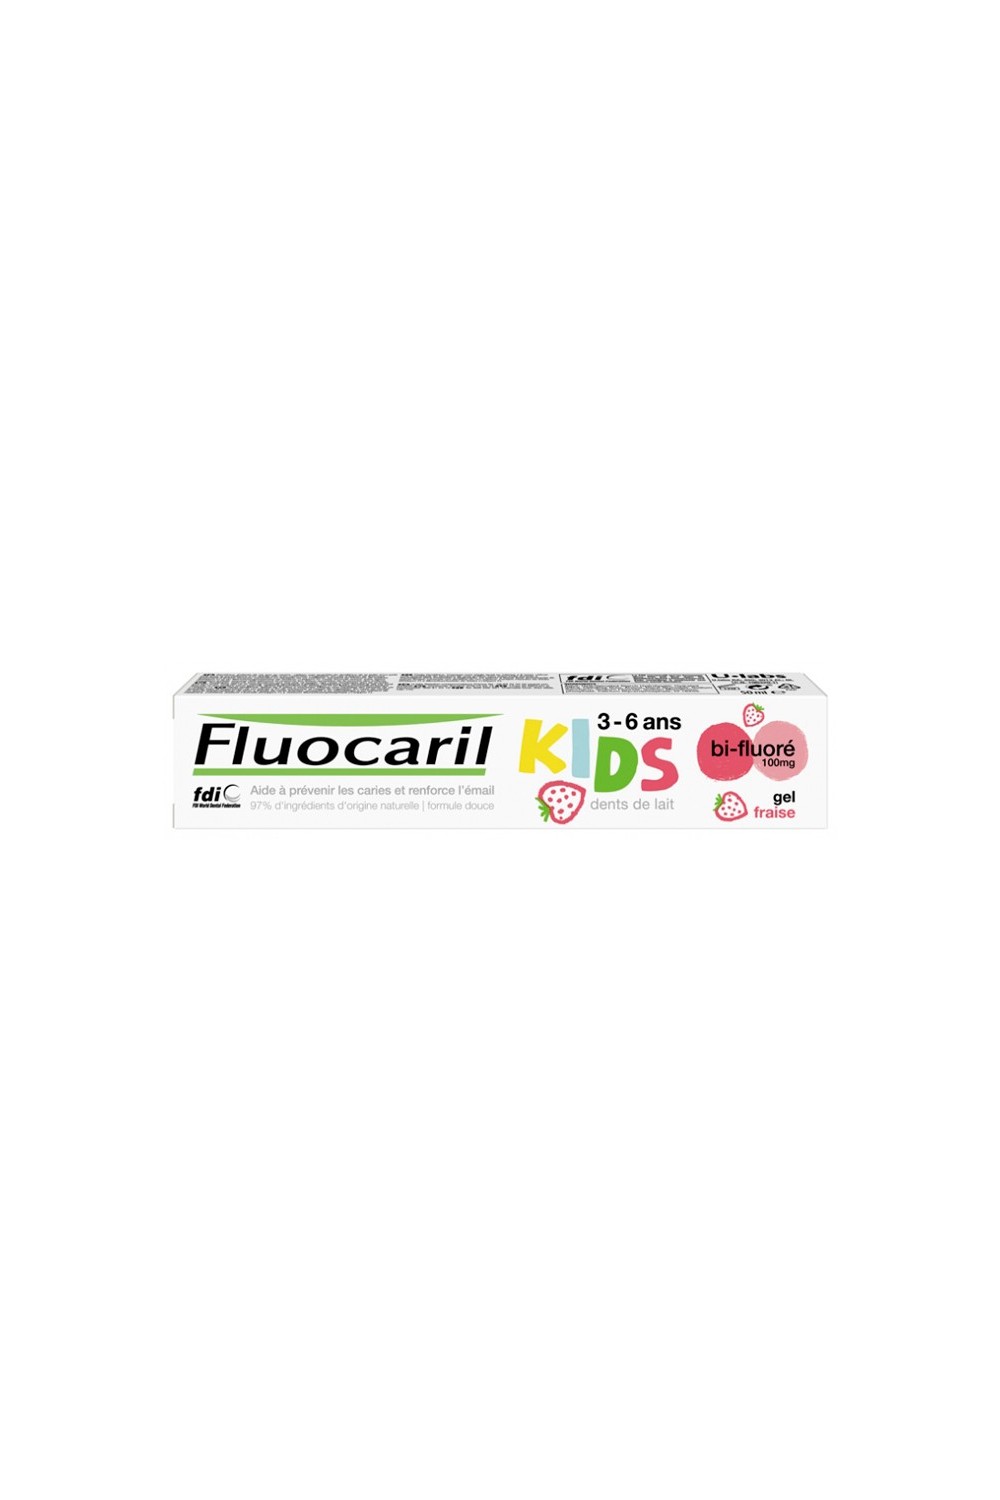 Fluocaril Kids Bi-fluoride Milk Teeth Strawberry Flavour 3-6 Years 50ml